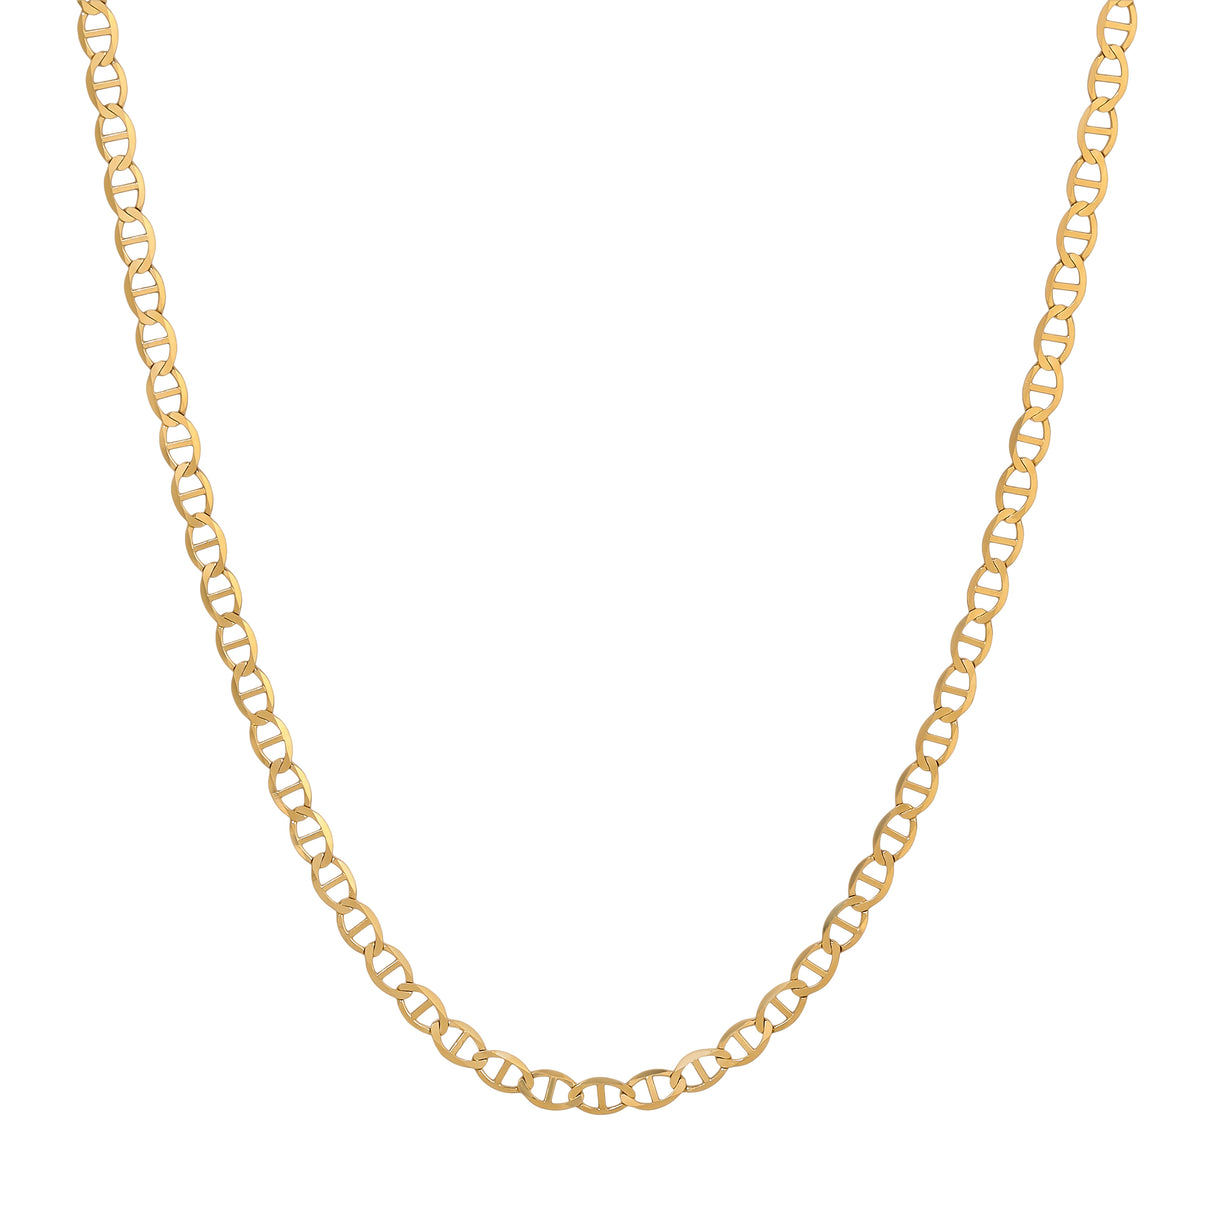 10K Solid Yellow Gold Necklace | Elegant Mariner Chain Design | Italian Fashions